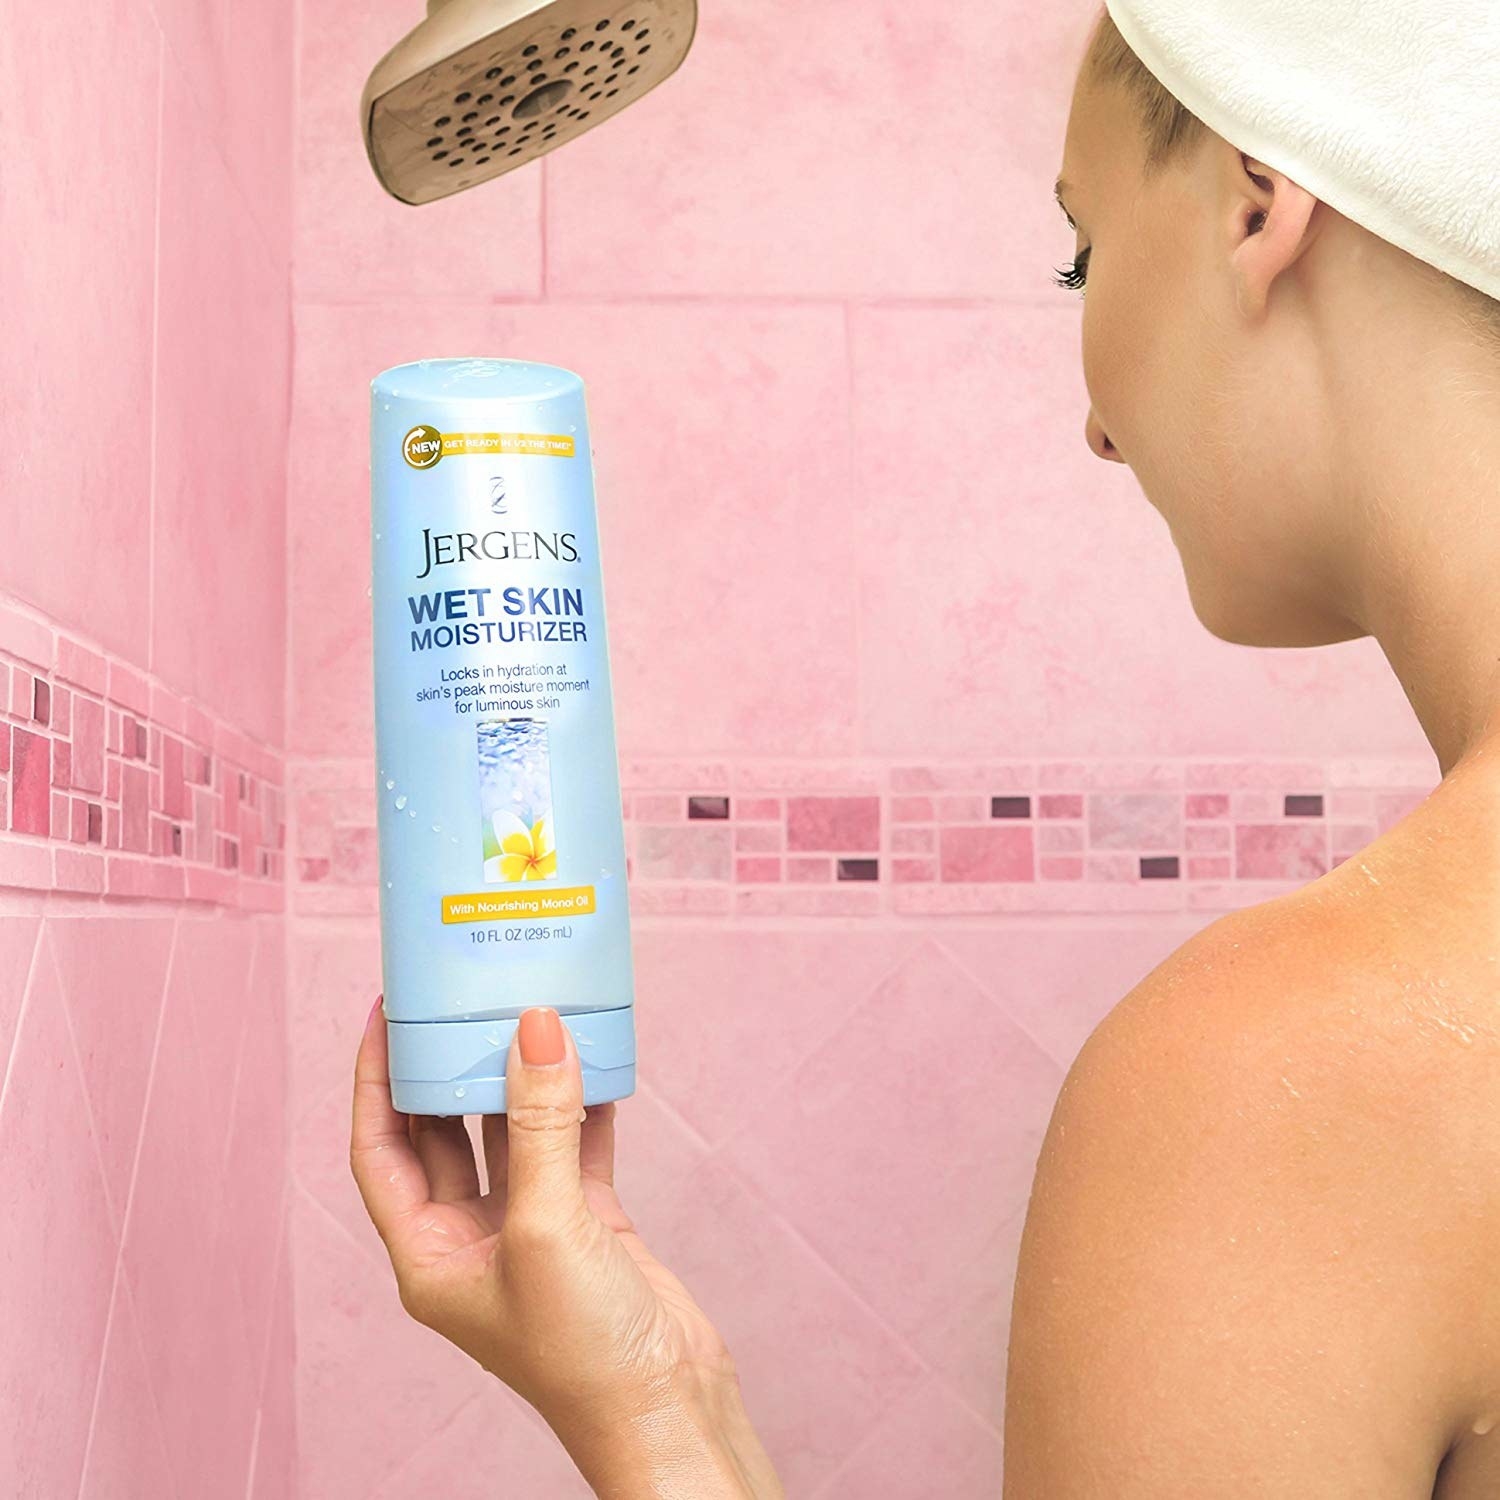 a model in a shower holding up a bottle of jergens wet skin moisturizer